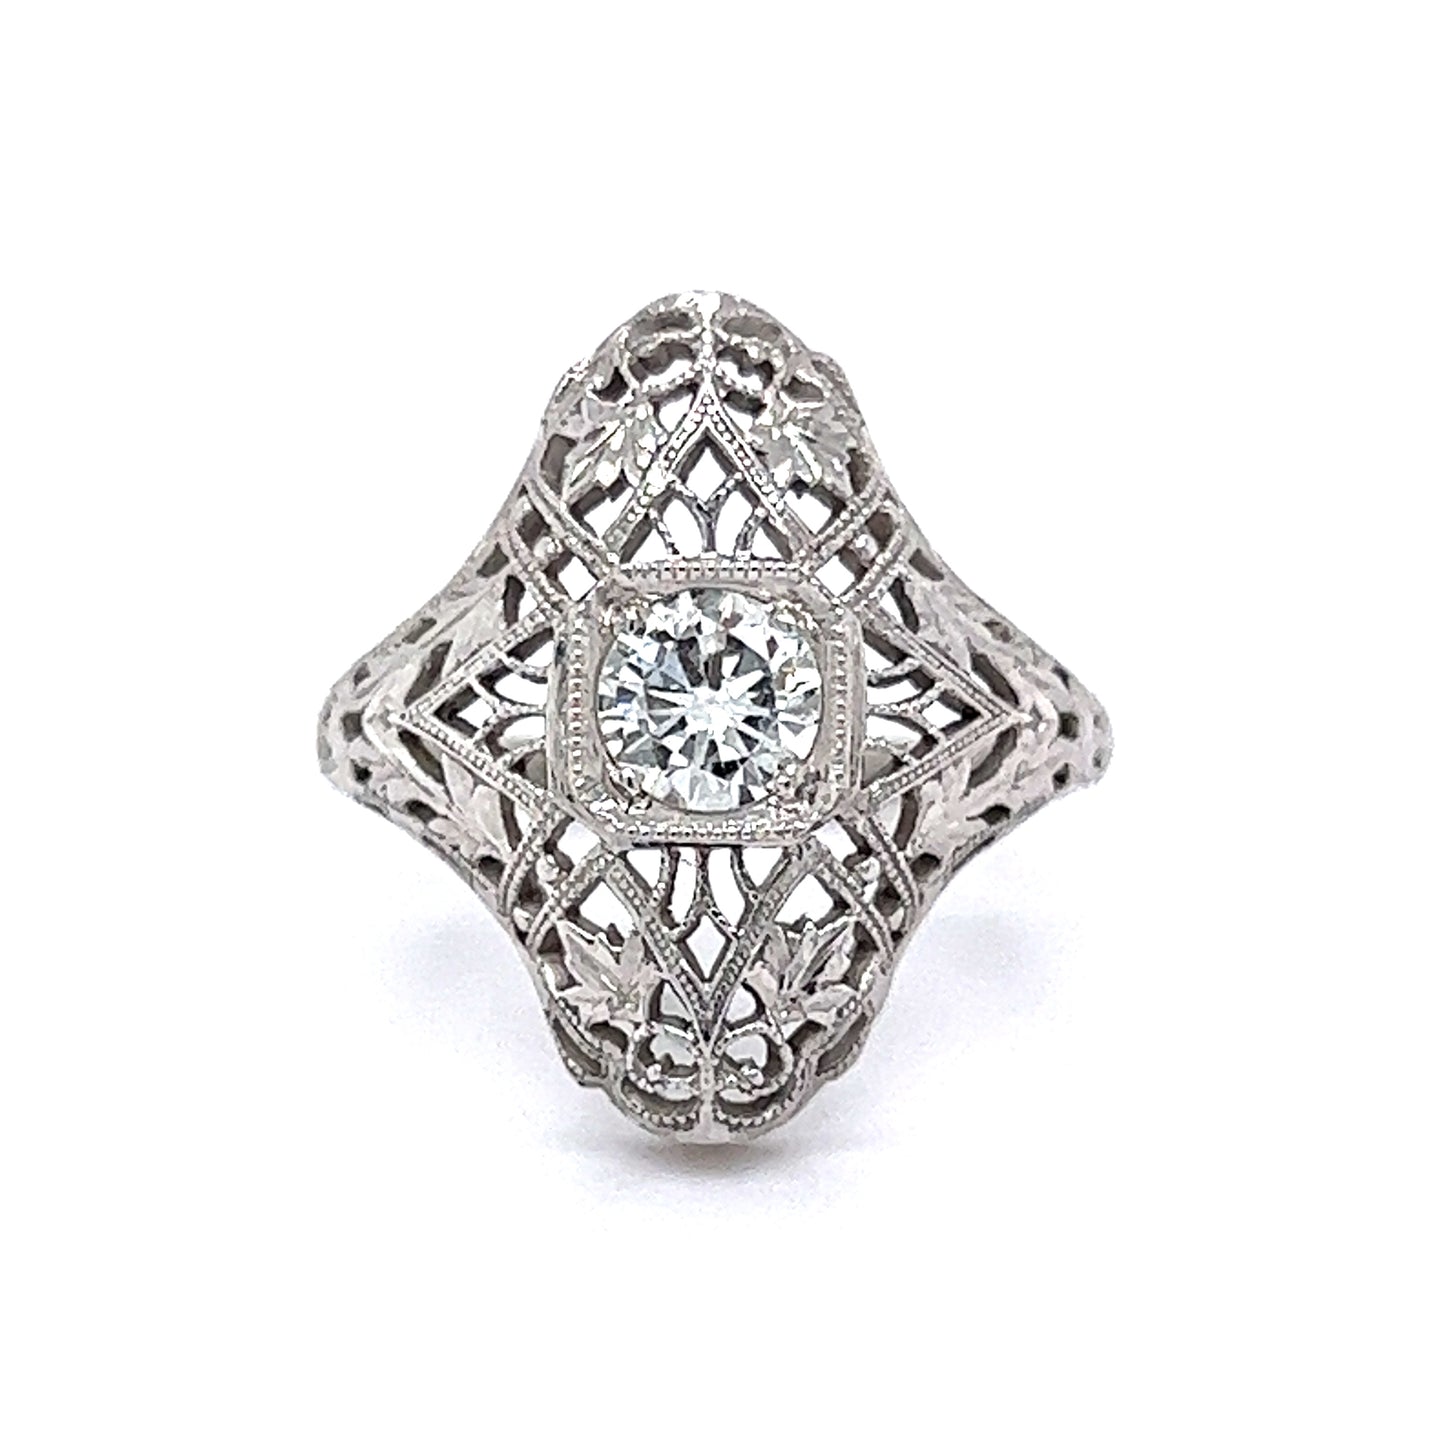 Art Deco Geometric Filigree Diamond Cocktail Ring in 18K